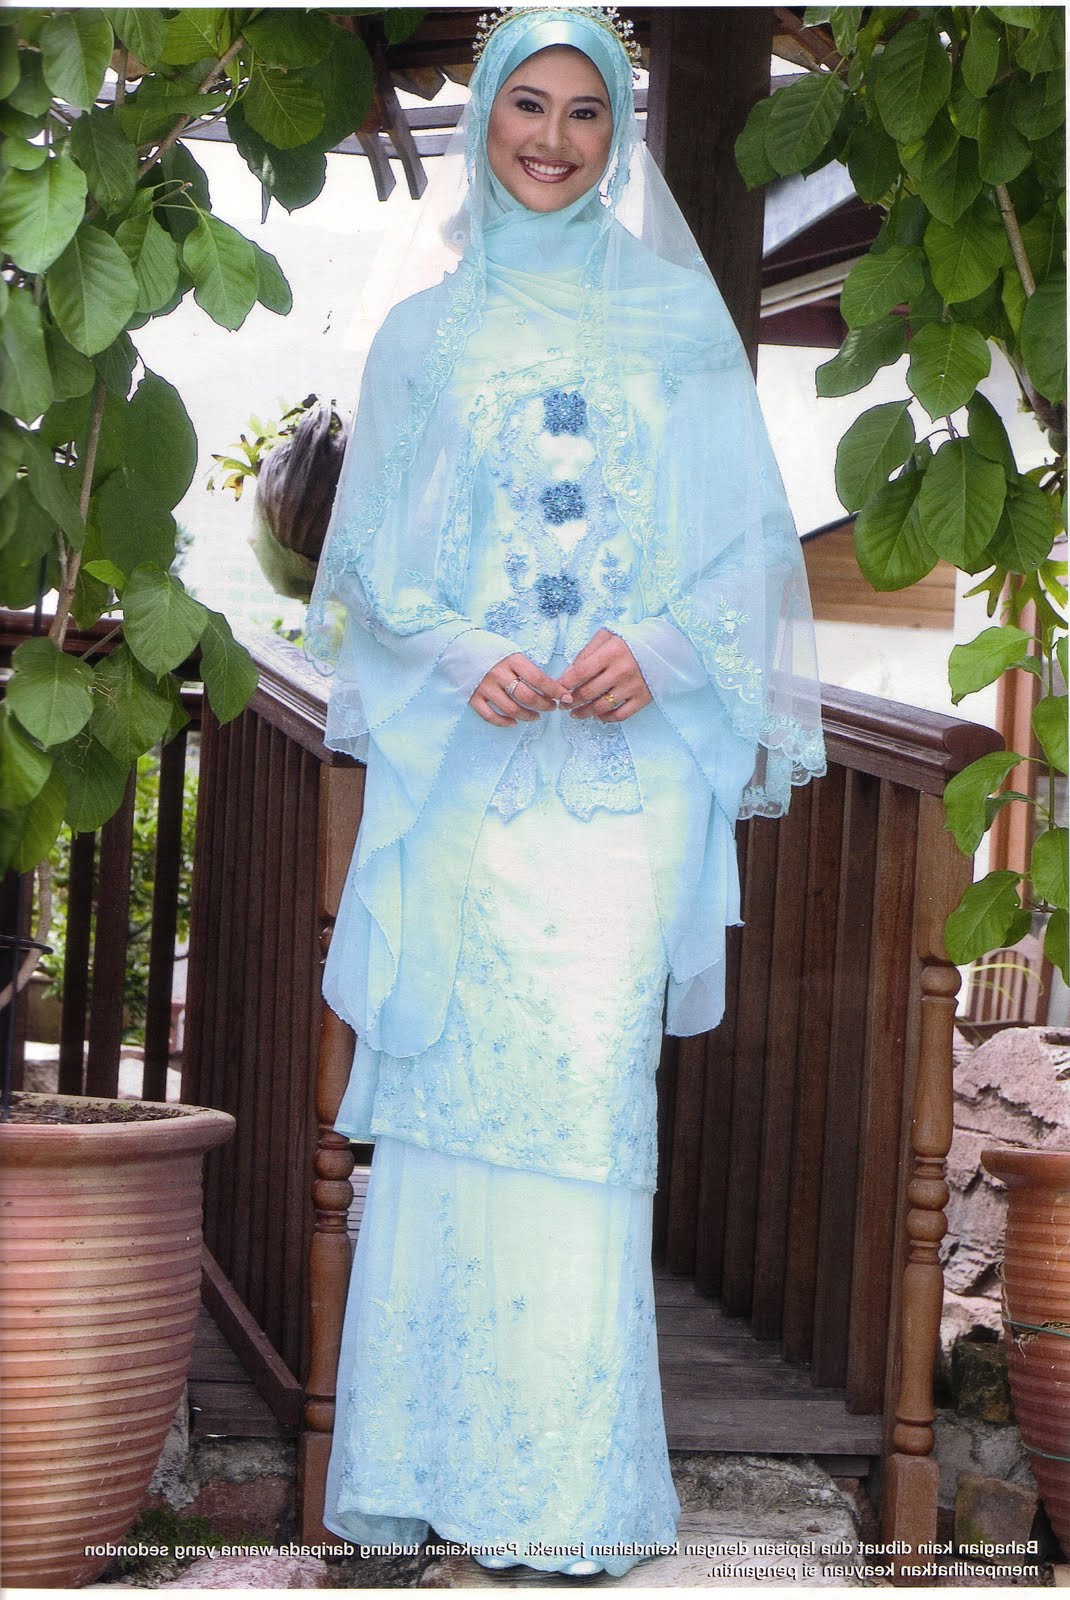  baju pengantin biru pink baju pengantin muslimah knitting 